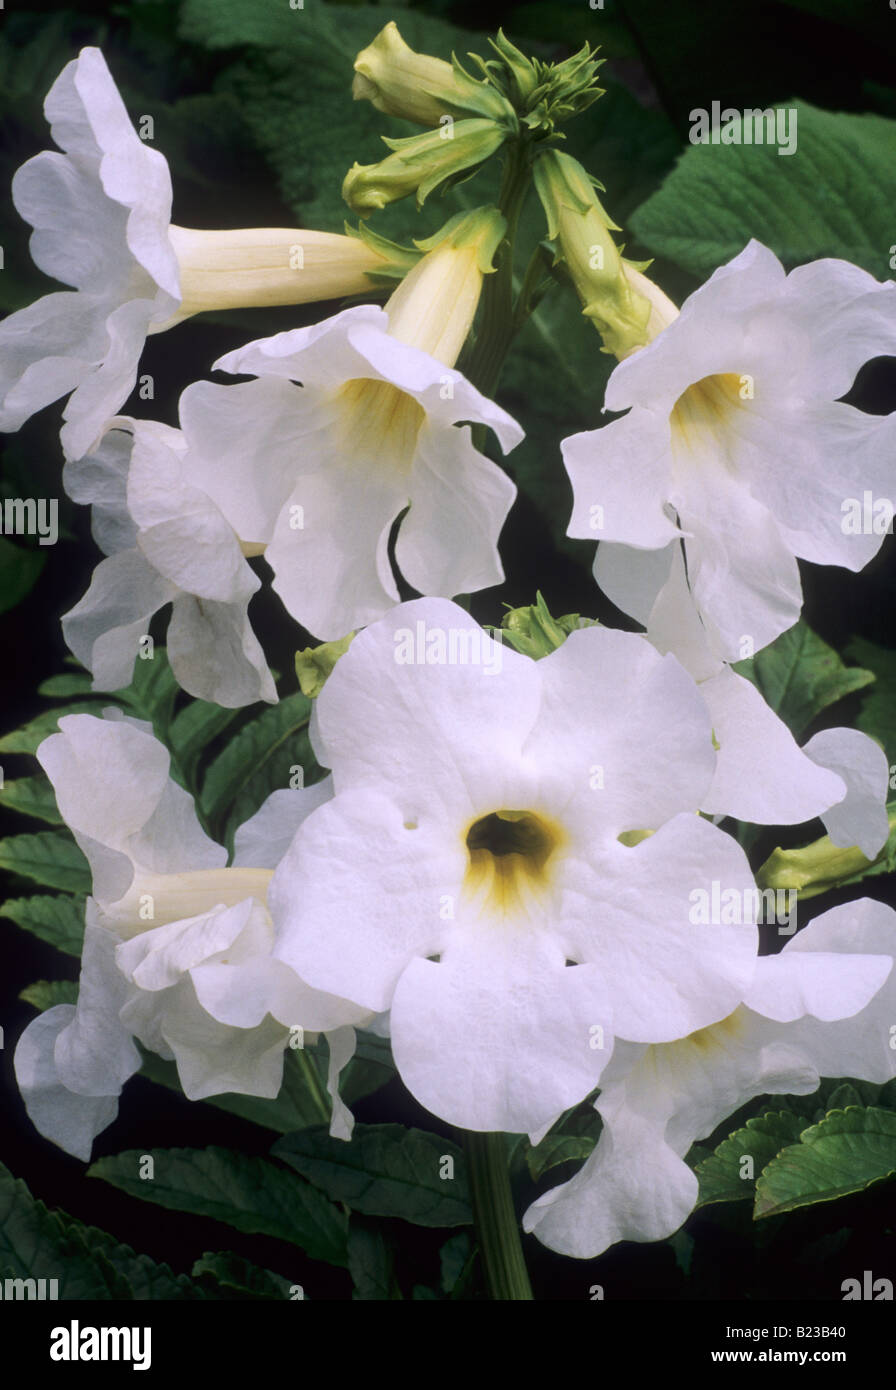 Incarvillea delavayi 'Alba' white flowers garden plant Stock Photo